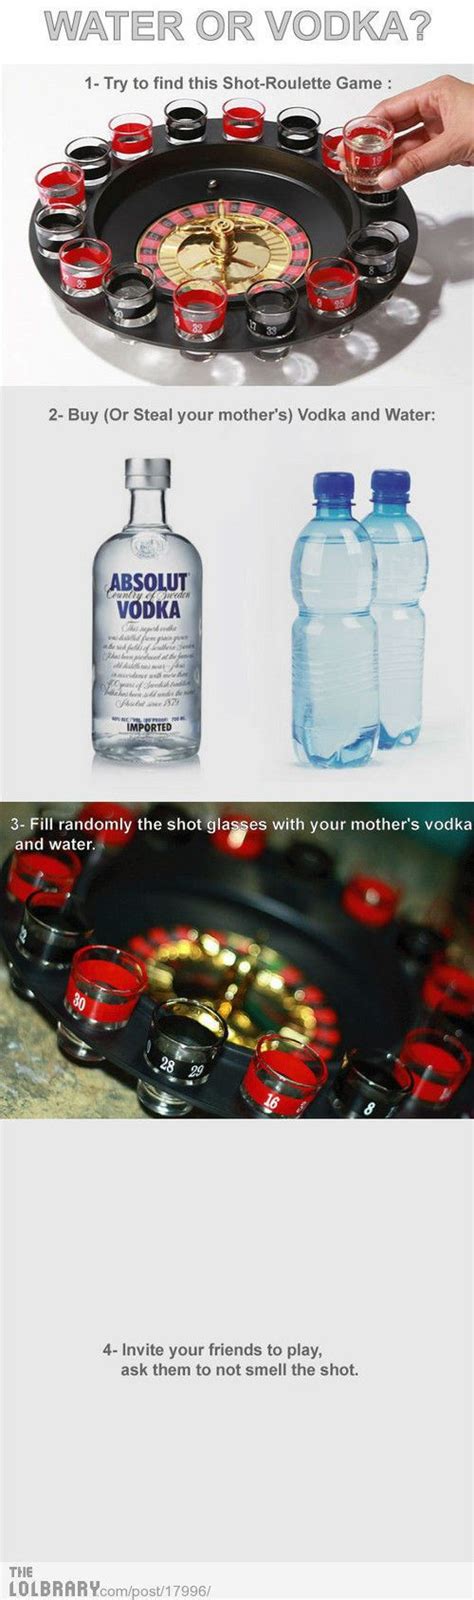 water or vodka lr title=